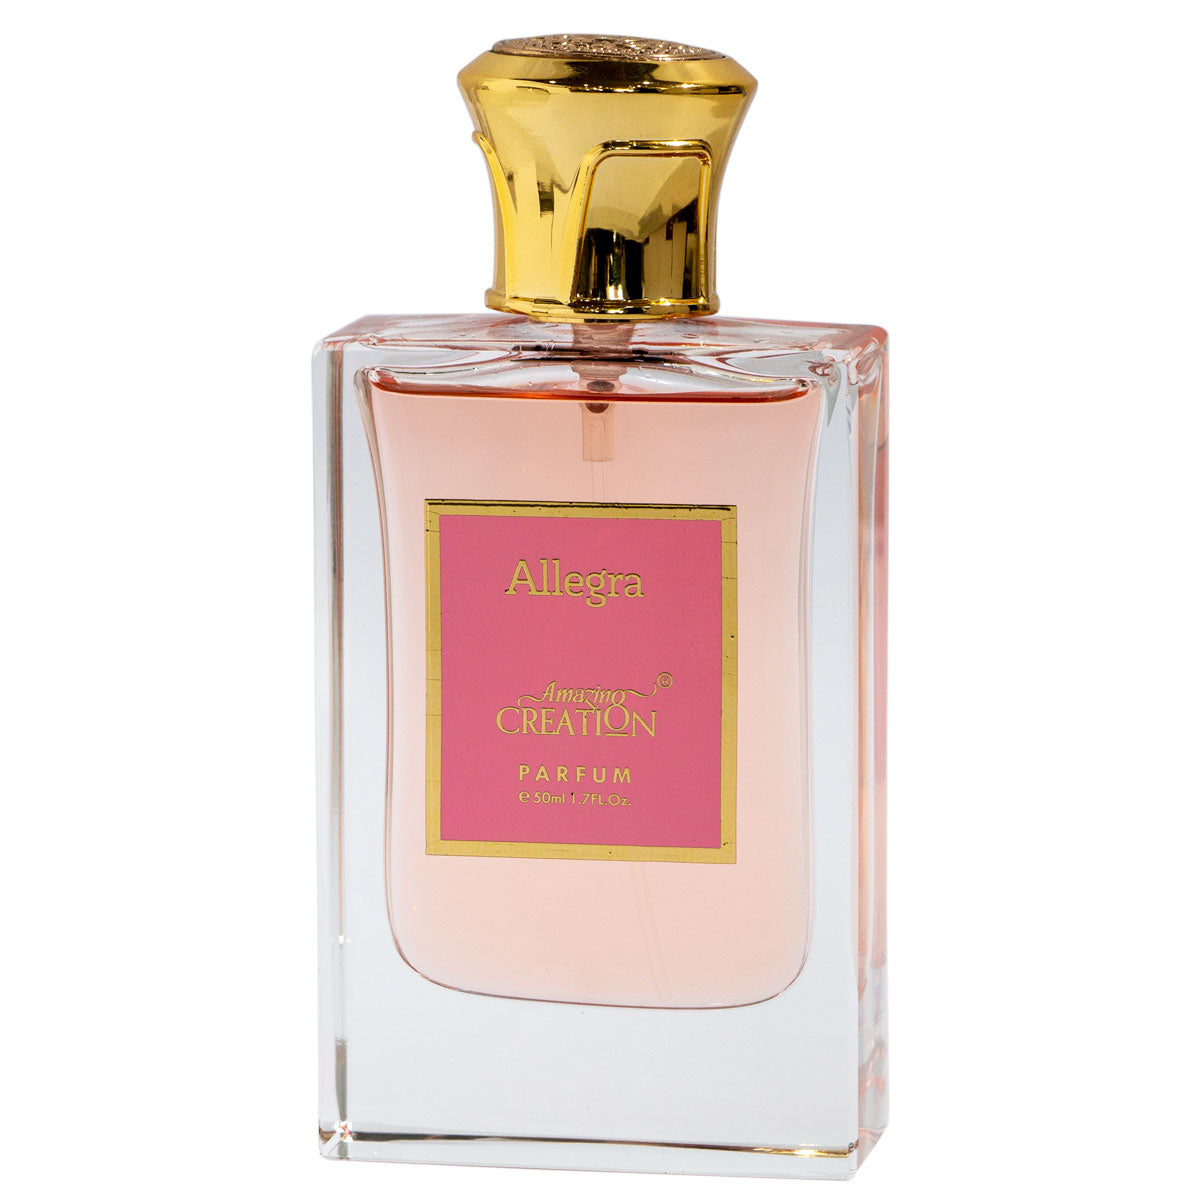 Allegra By Amazing Creation, Perfume for Women, Parfum, 50ml - samawa perfumes 